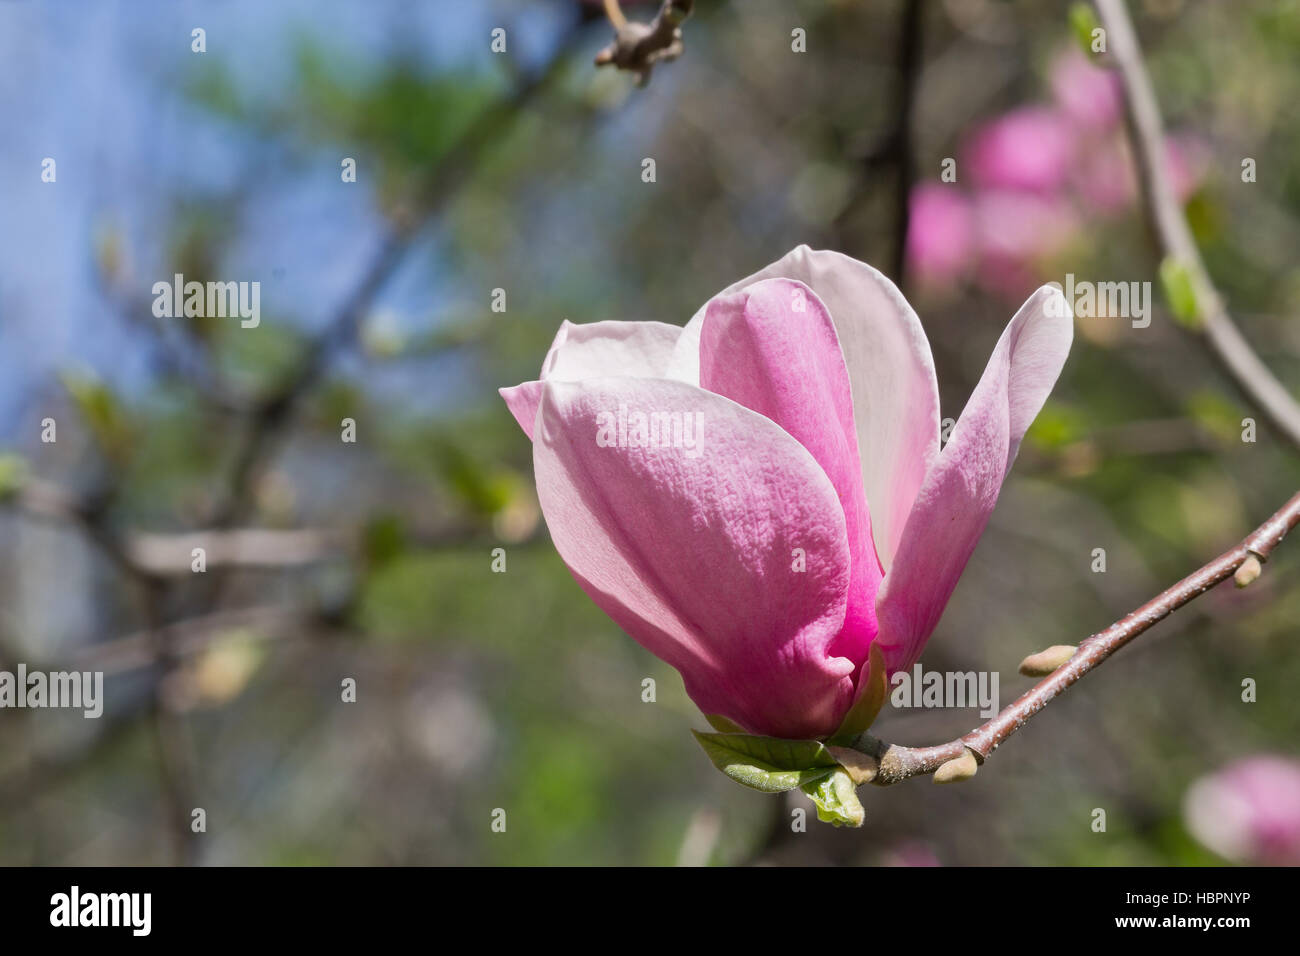 Rosa Magnolie Blume Closeup mit Textfreiraum Stockfoto